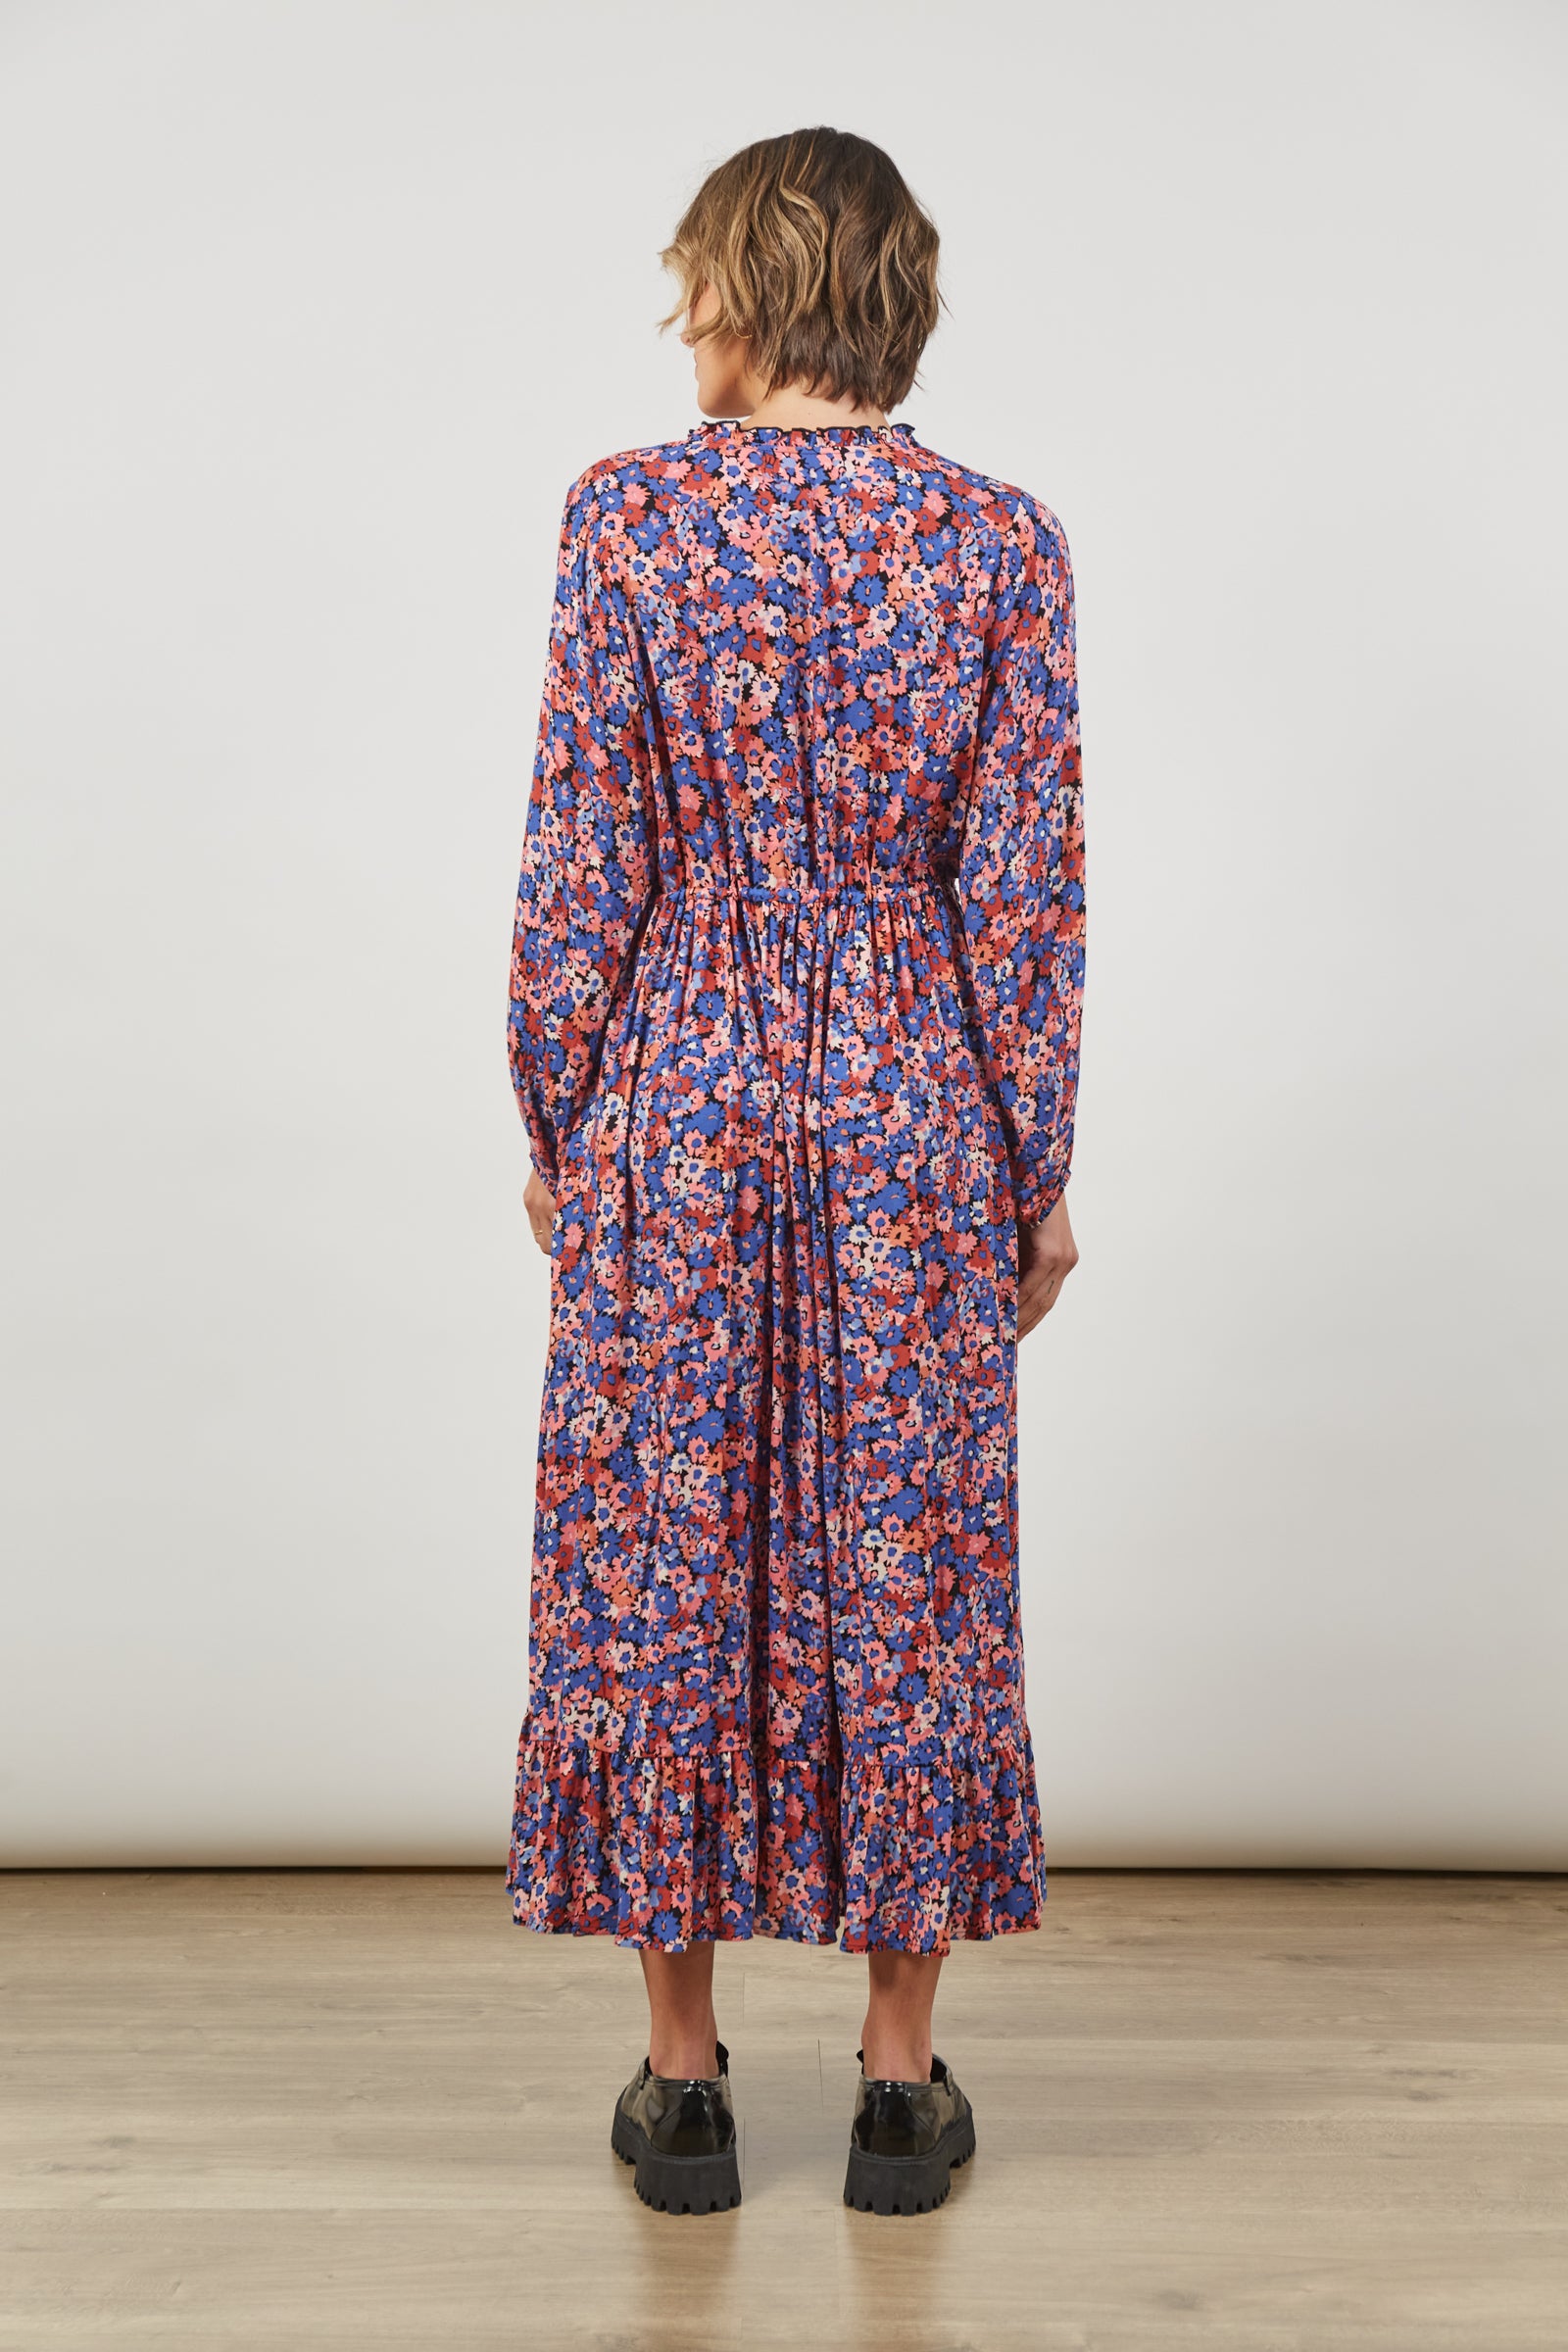 Euphoria Tie Maxi - Azure Bloom - Isle of Mine Clothing - Dress Maxi Dressy